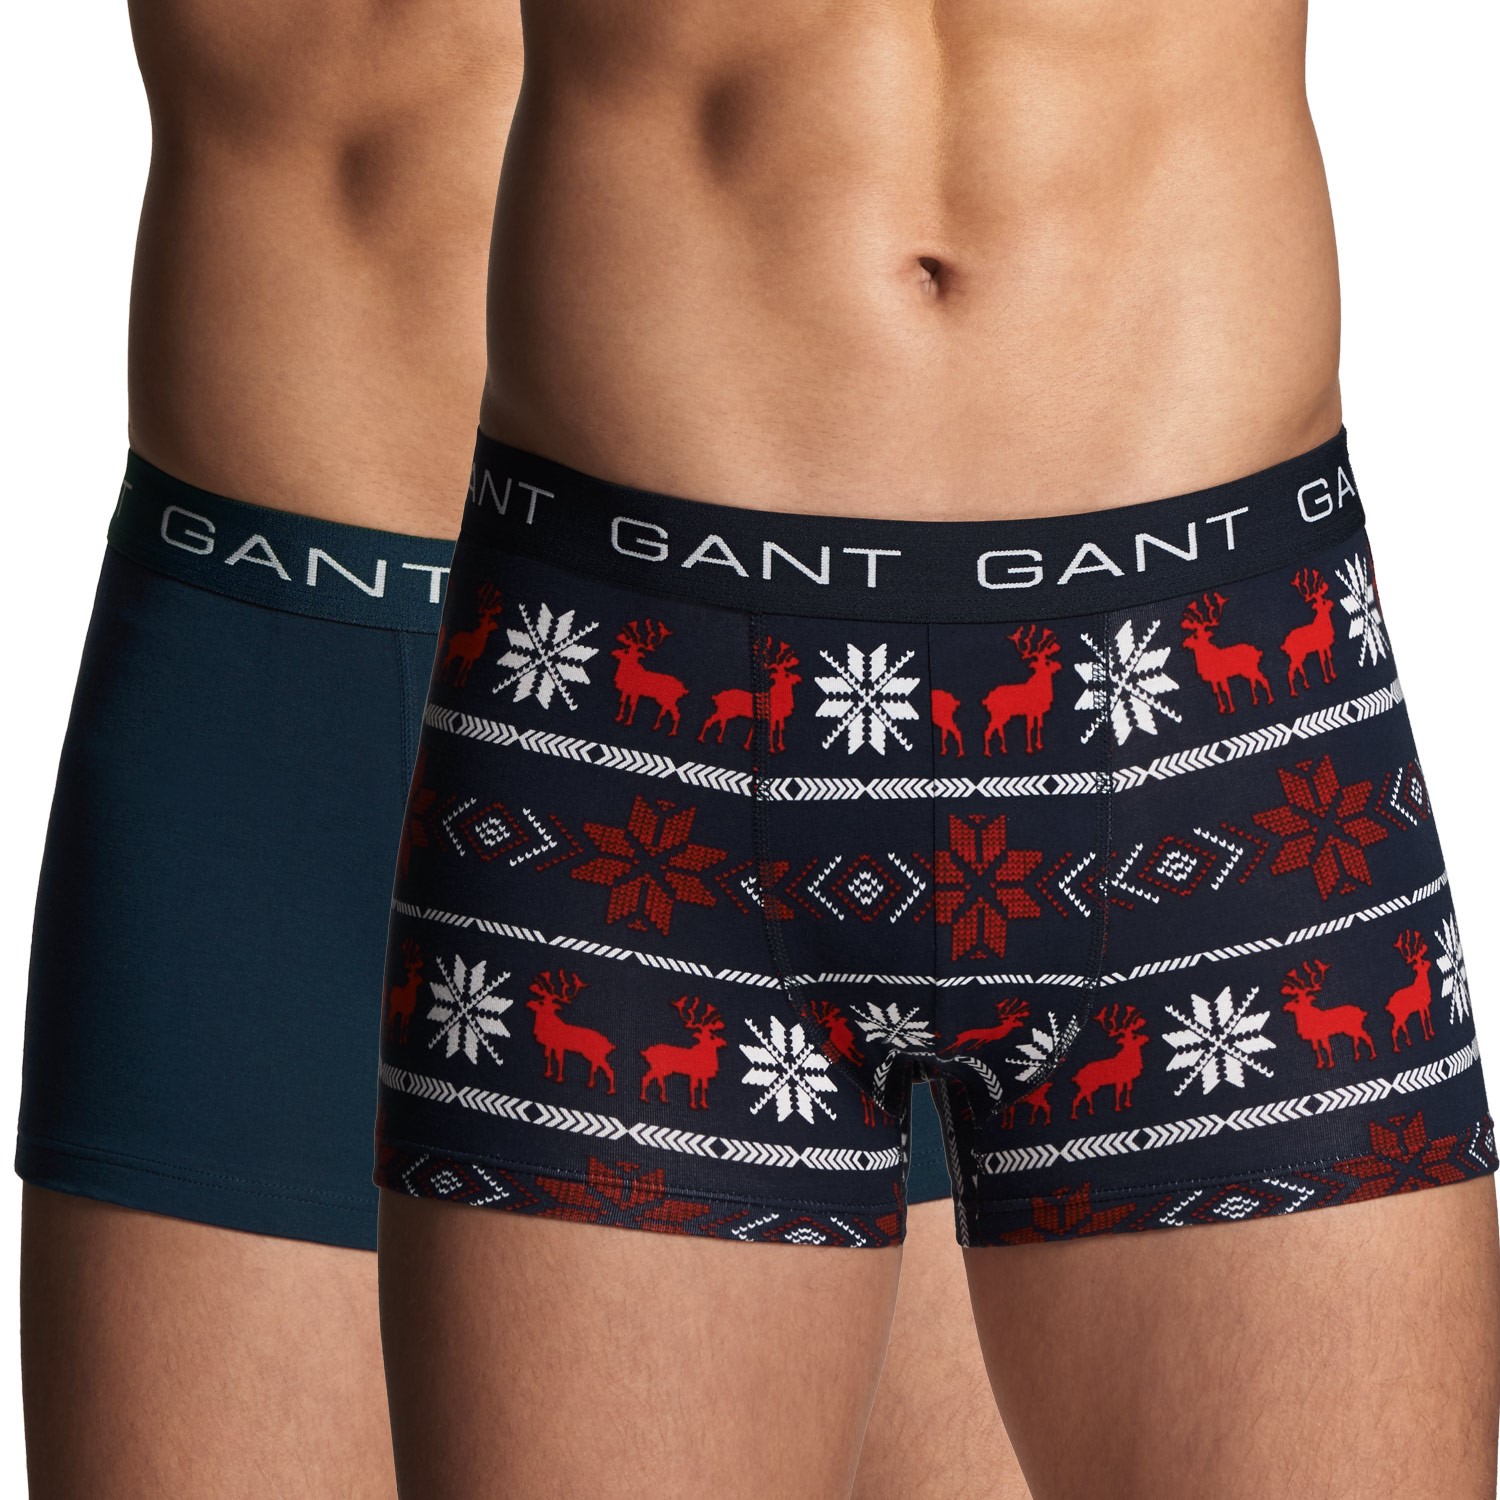 Gant Essential Cotton Stretch Trunks Gift Box 2